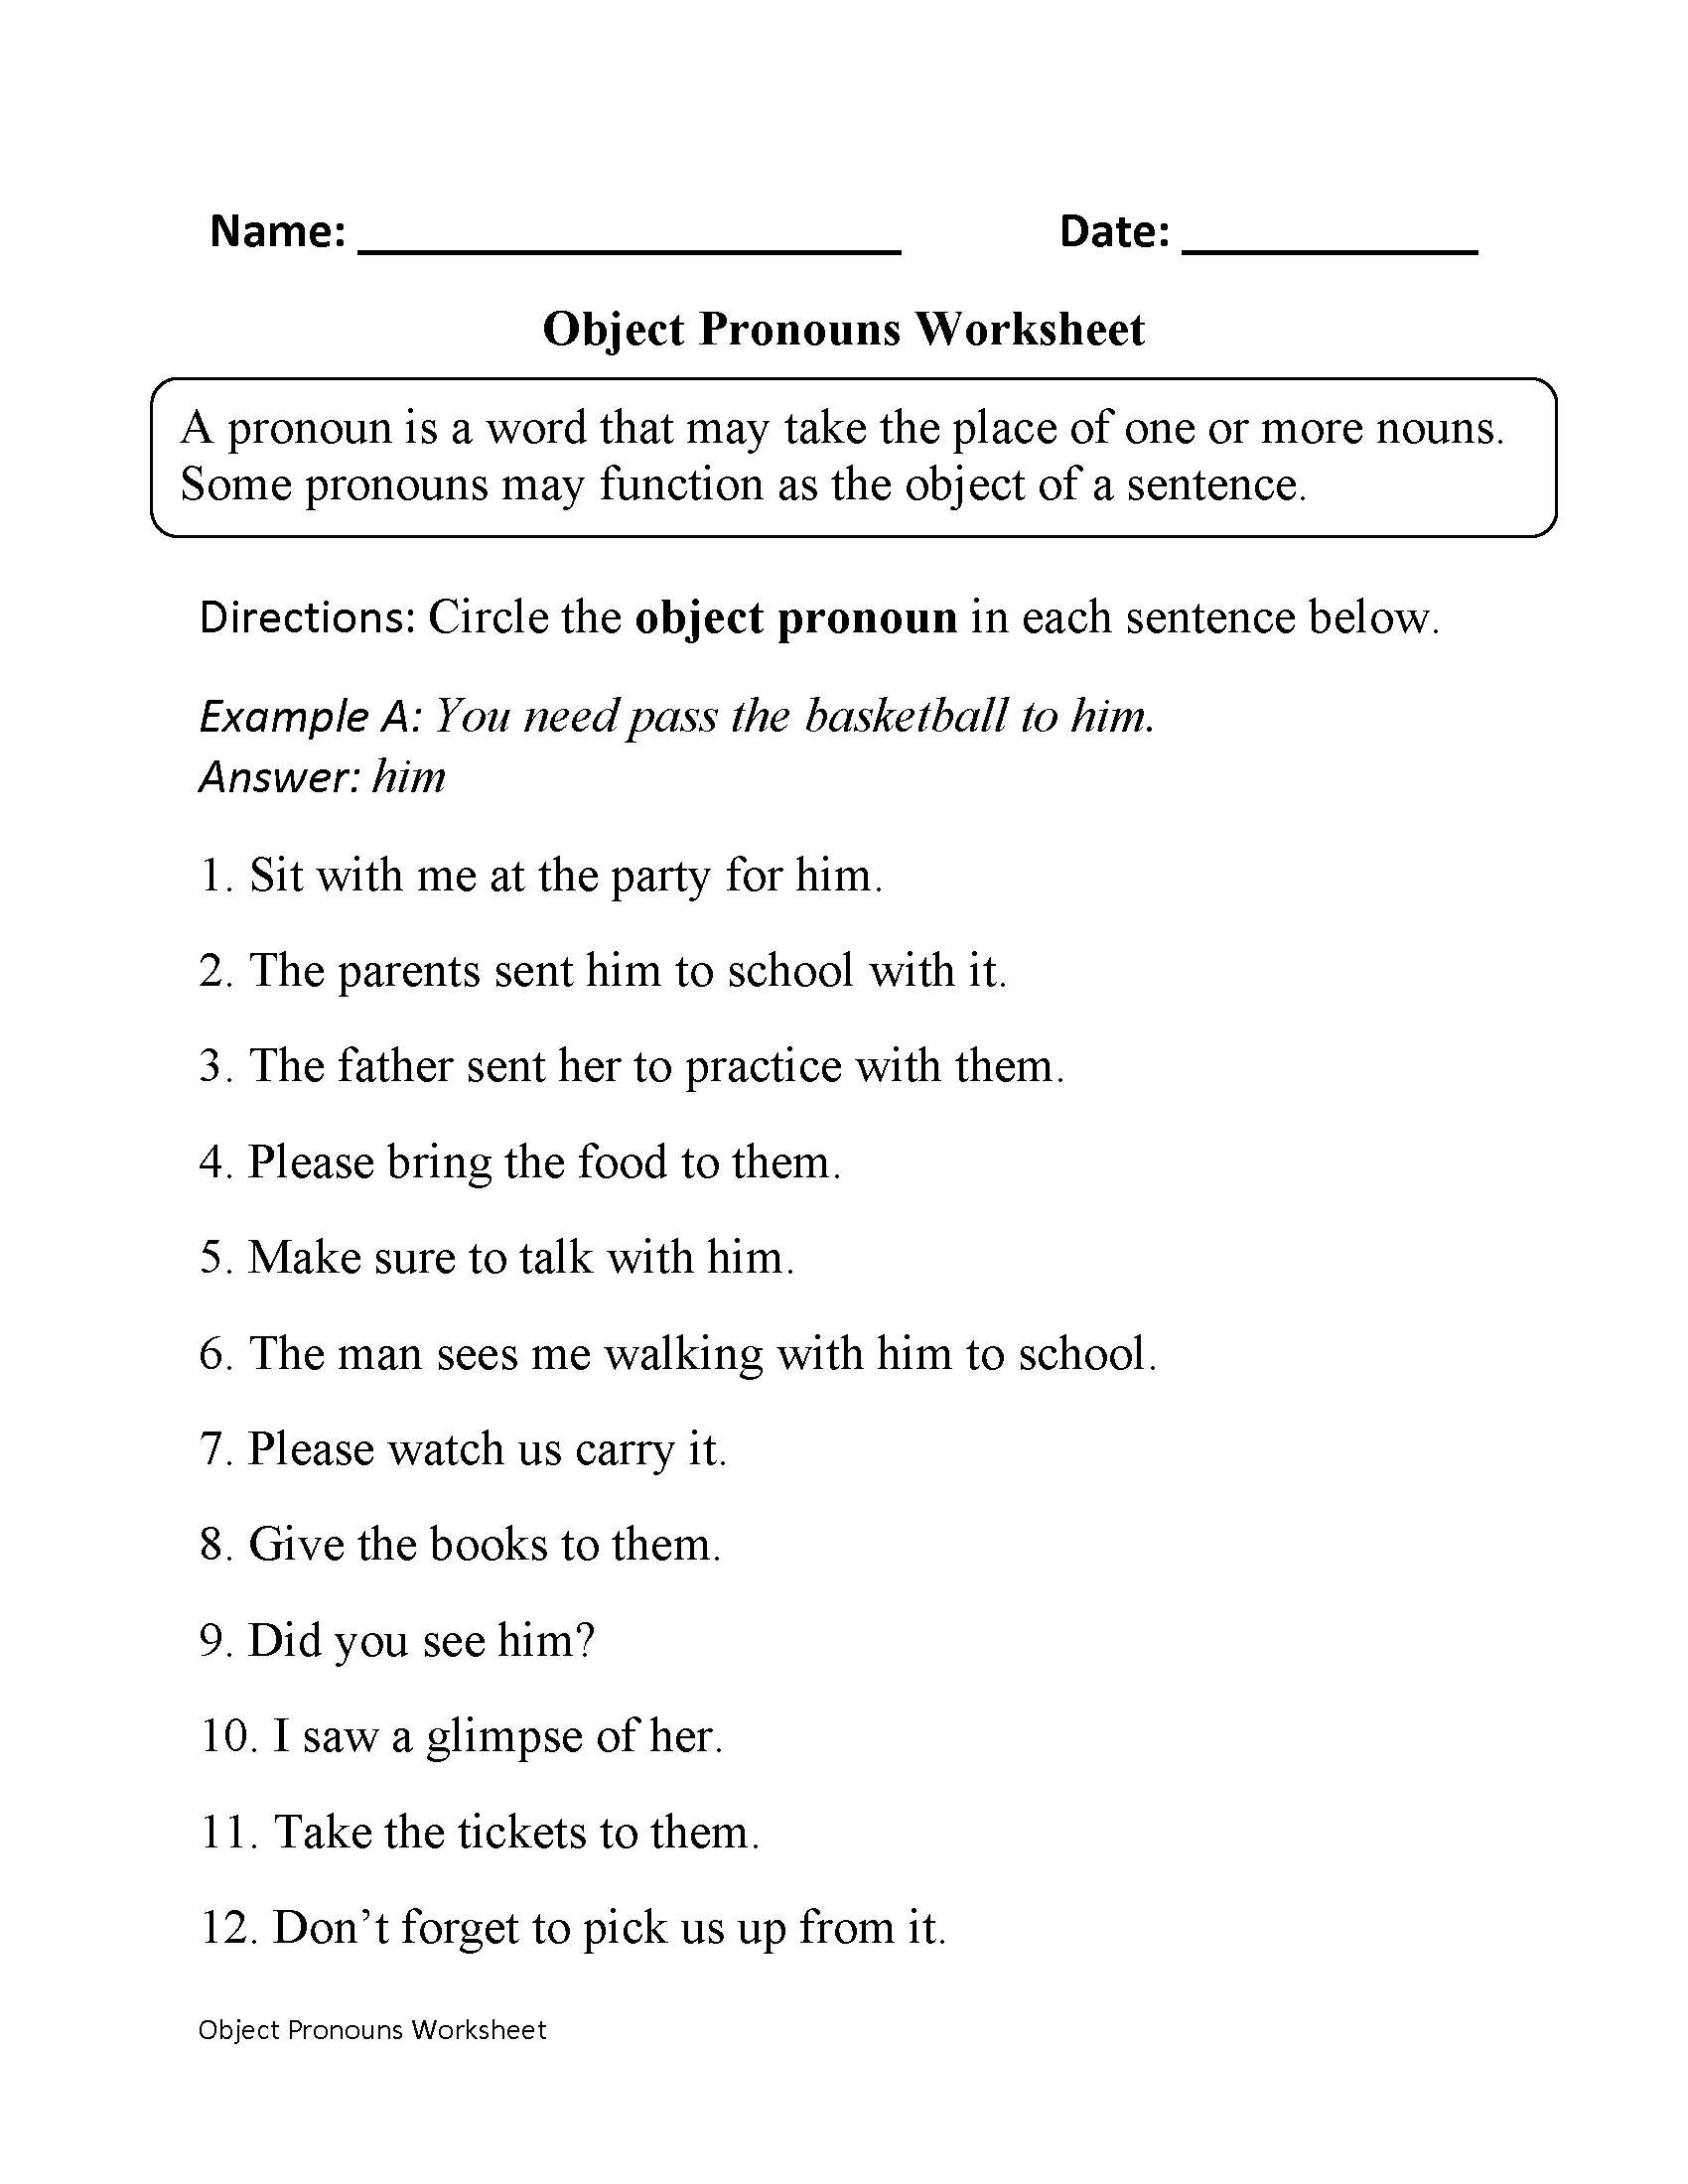 object-pronouns-worksheet